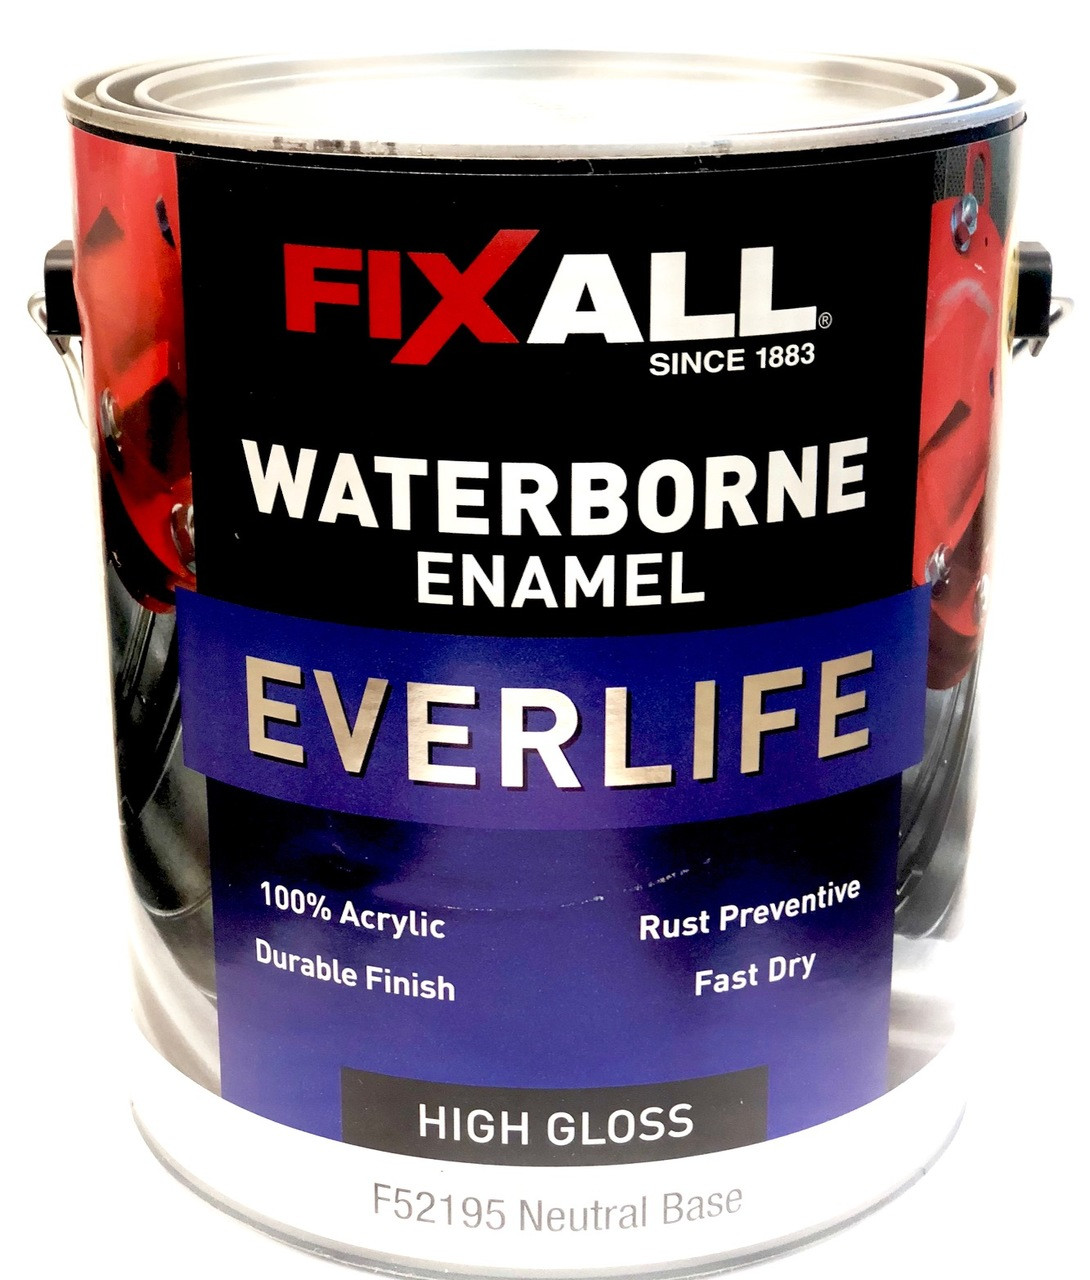 Fixall Everlife Waterborne Enamel High Gloss Gallon Formerly Graham Aqua Borne Ceramic